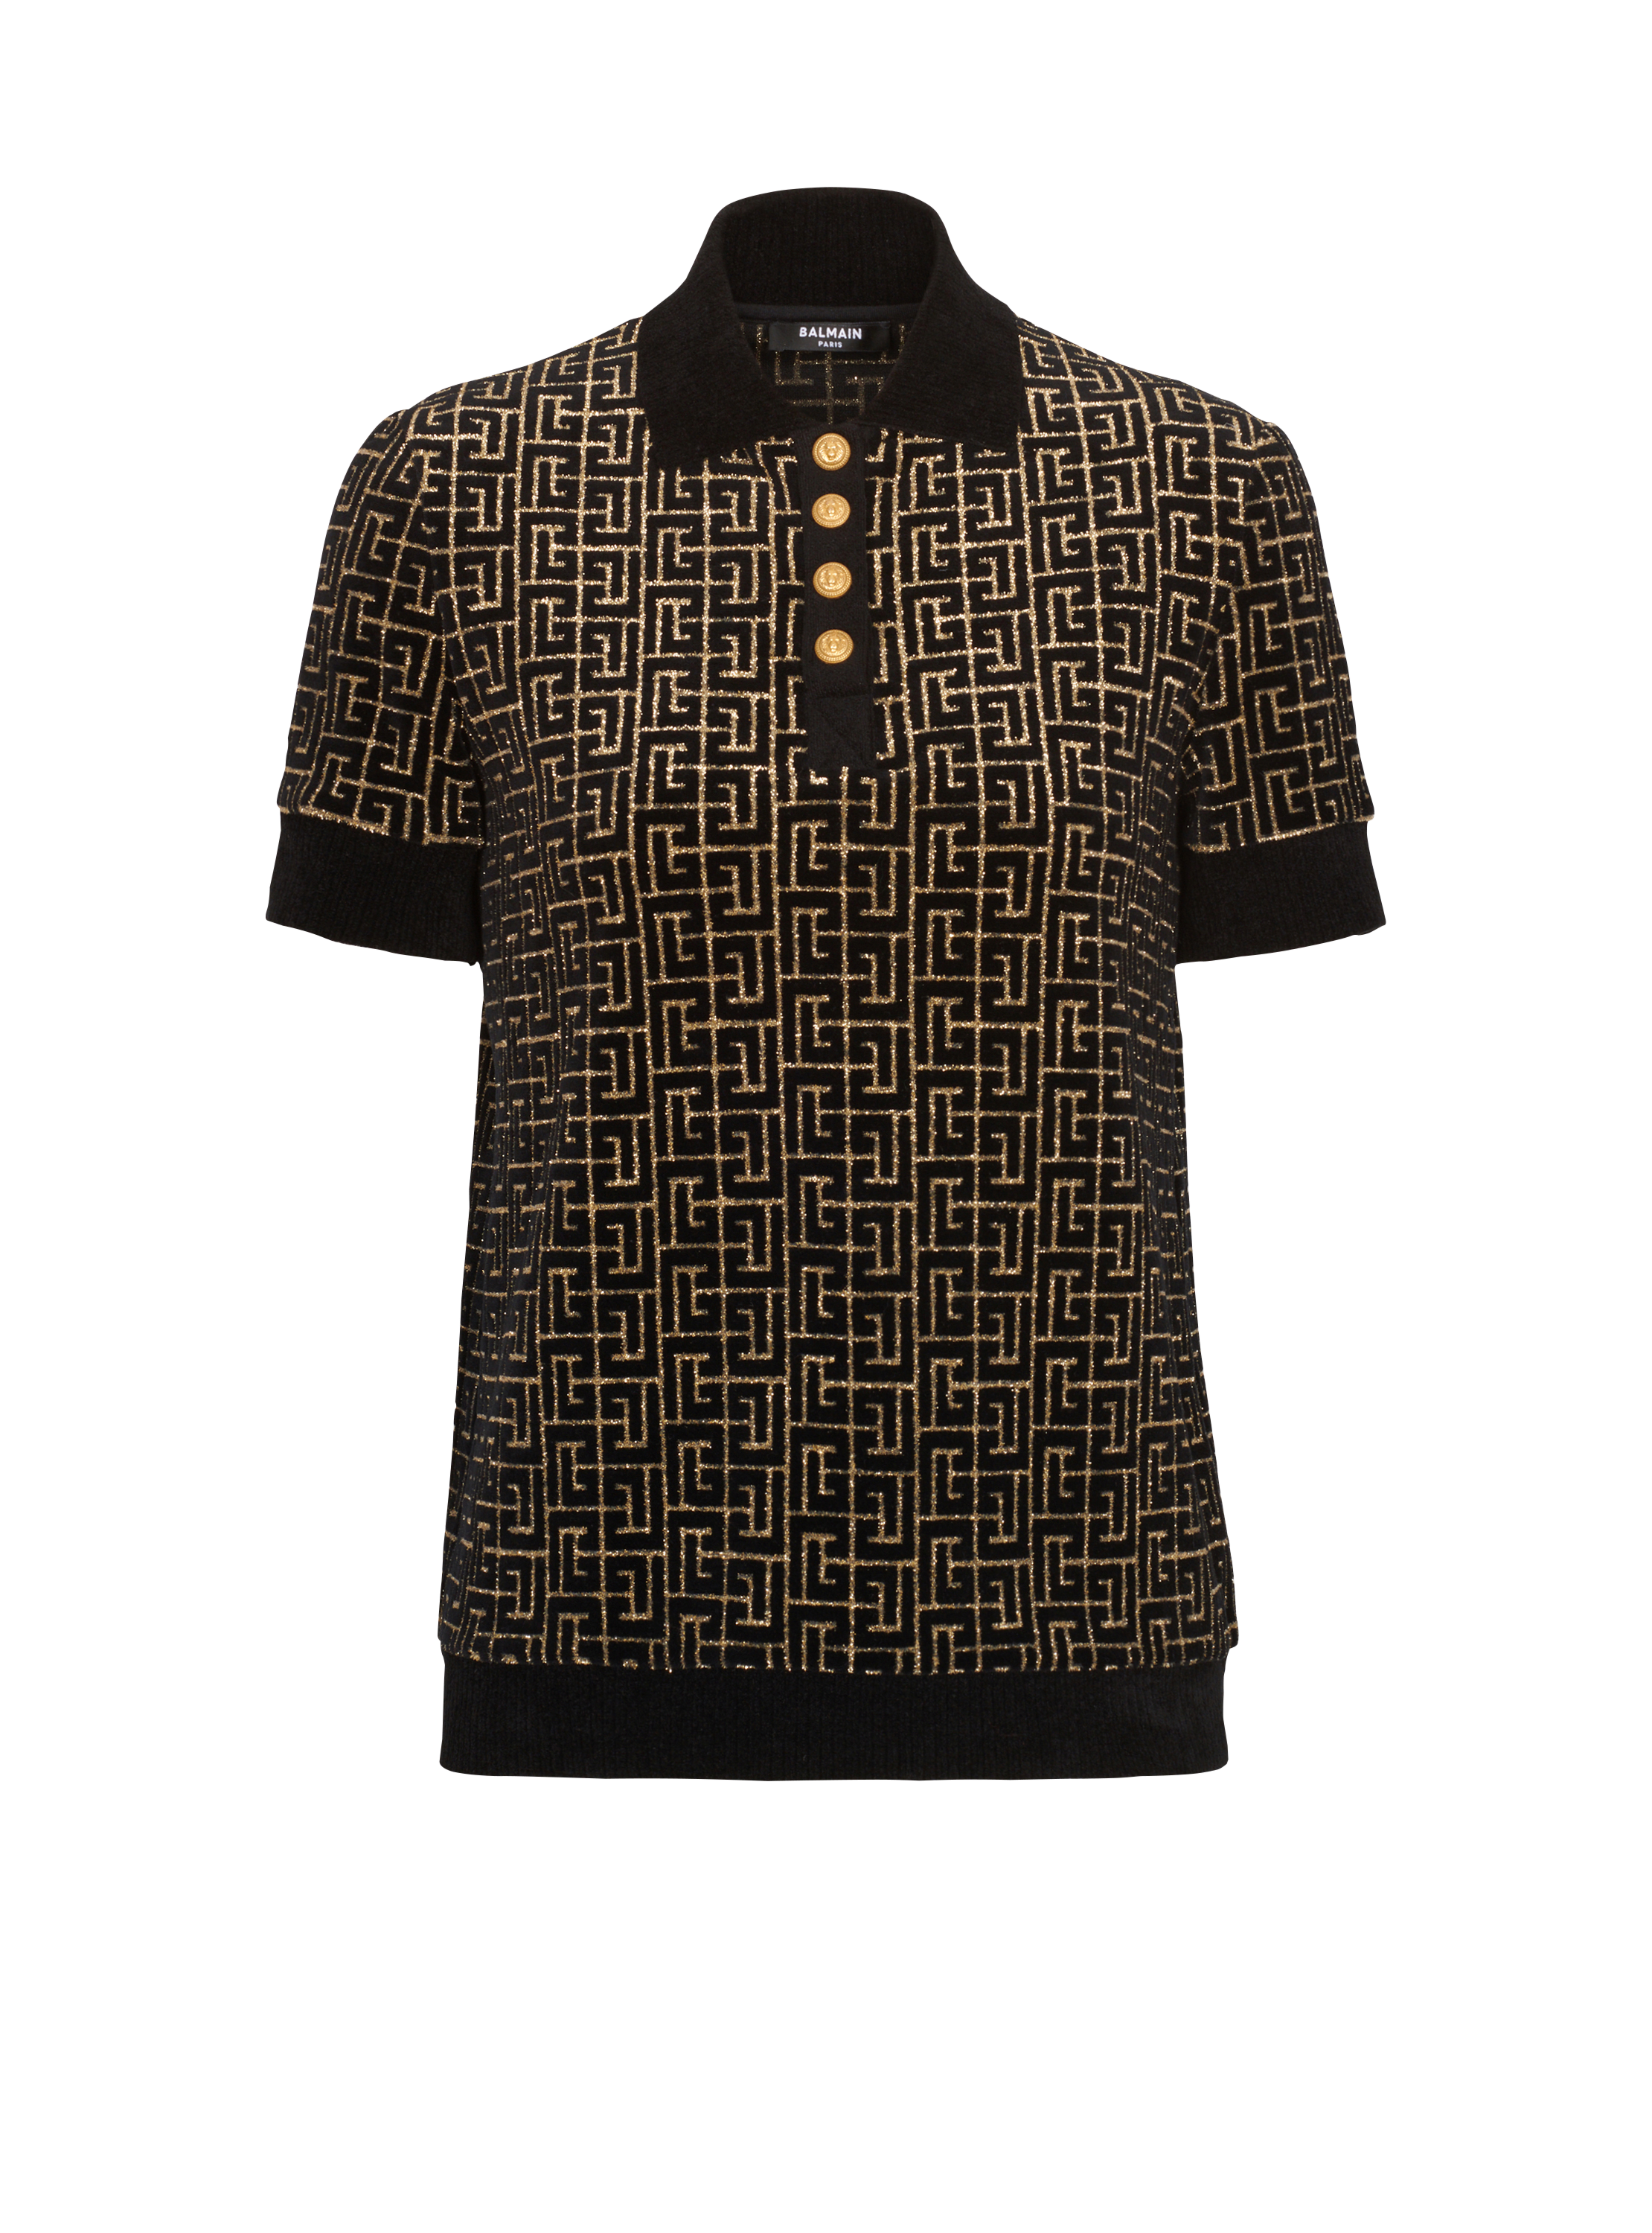 Monogramm-Polohemd aus Velours-Jacquard, schwarz, hi-res